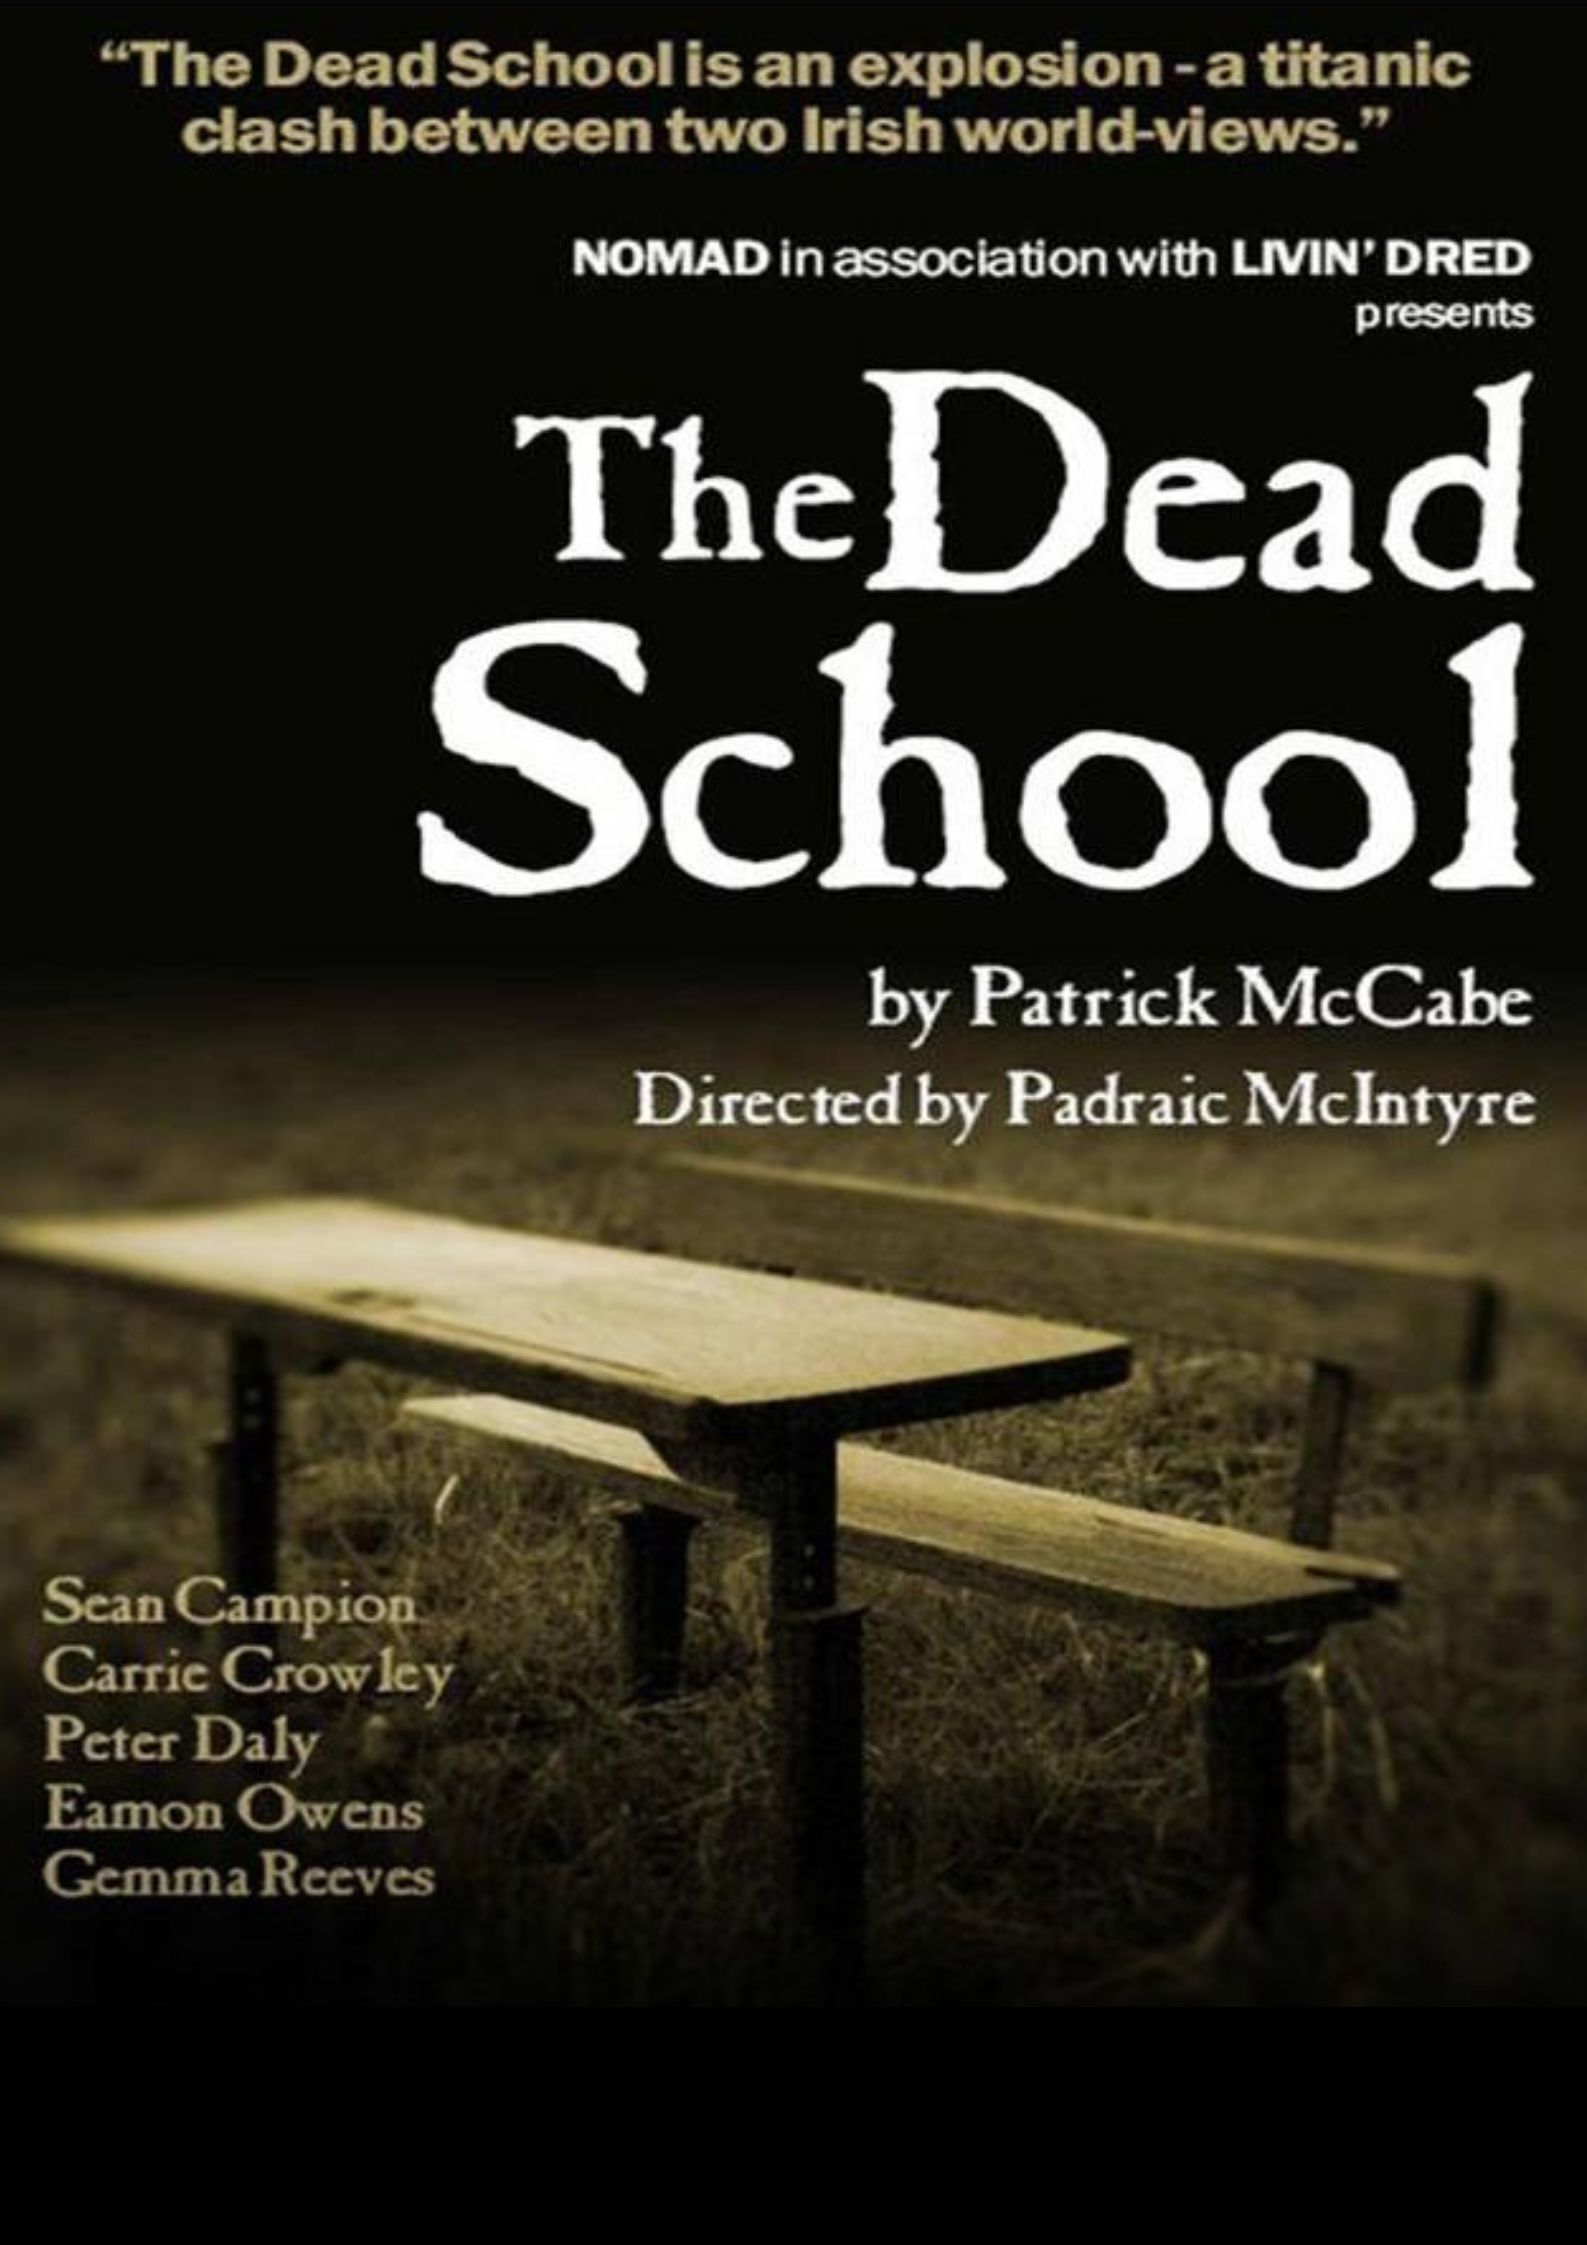 The Dead School poster